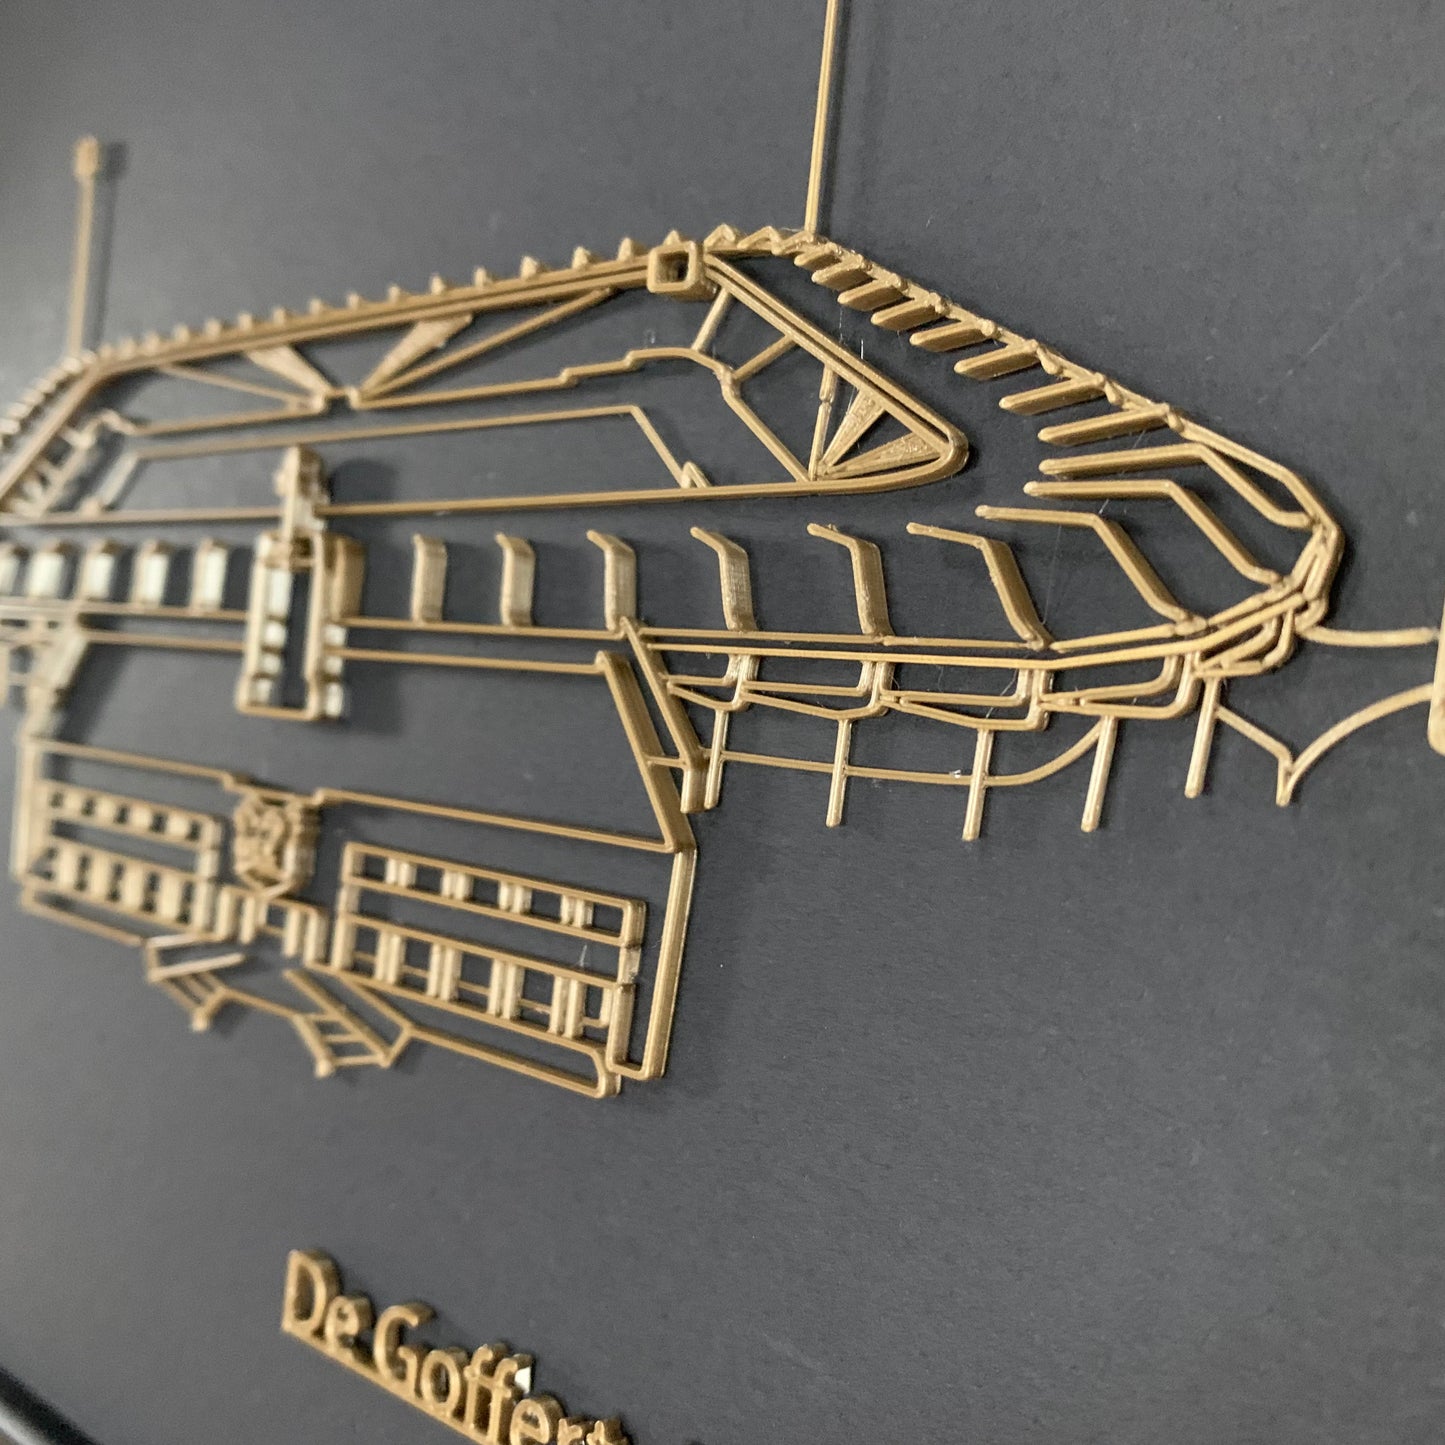 Goffertstadion - Nijmegen (NL - Eredivisie) (3D print)